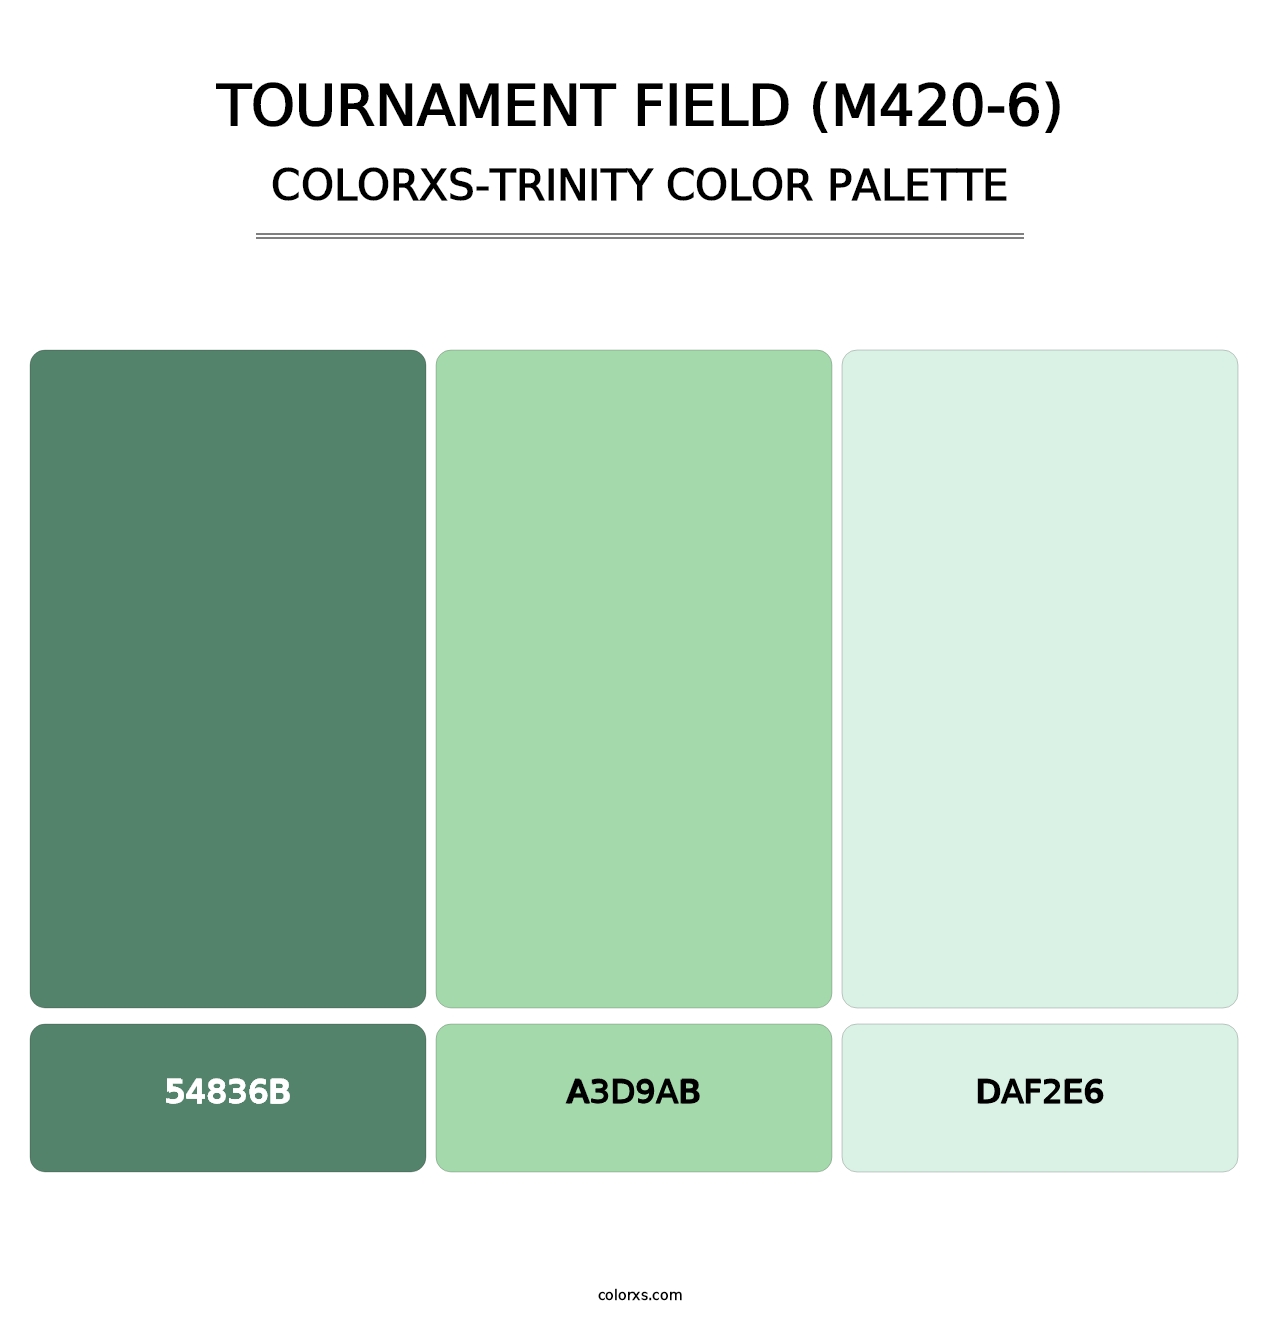 Tournament Field (M420-6) - Colorxs Trinity Palette